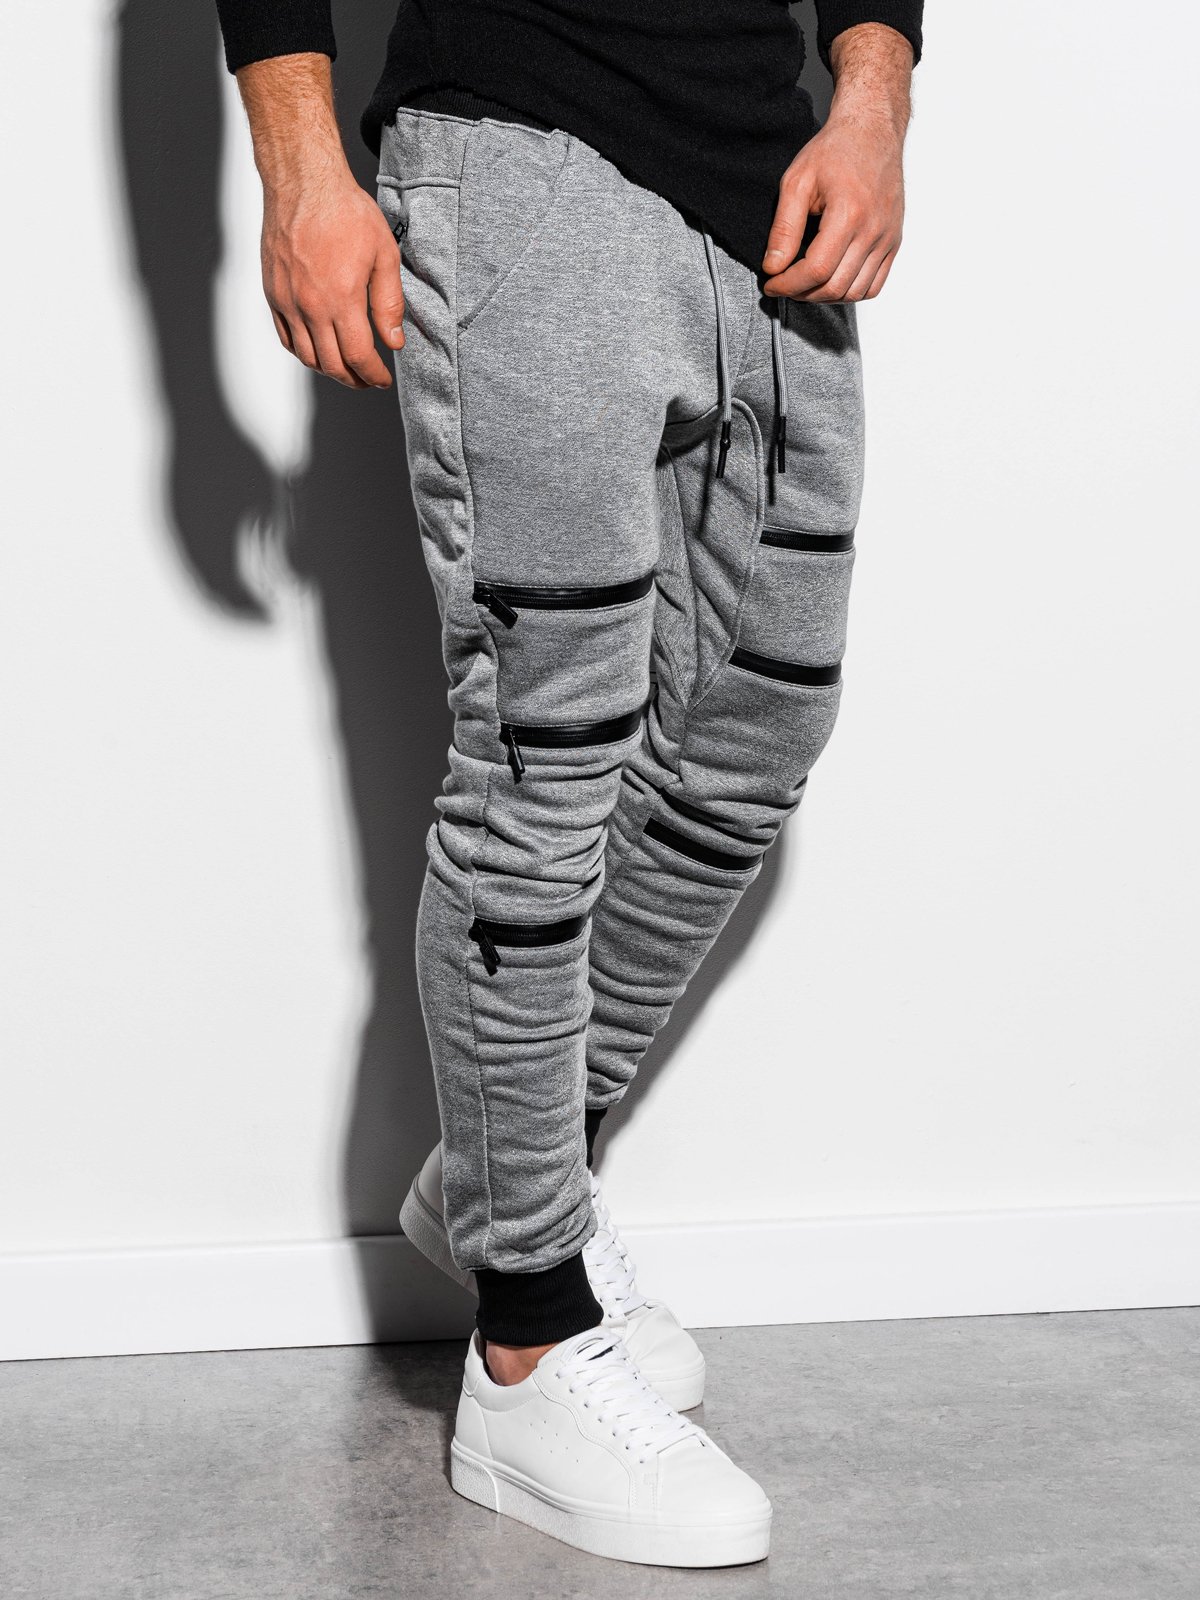 dark grey sweatpants